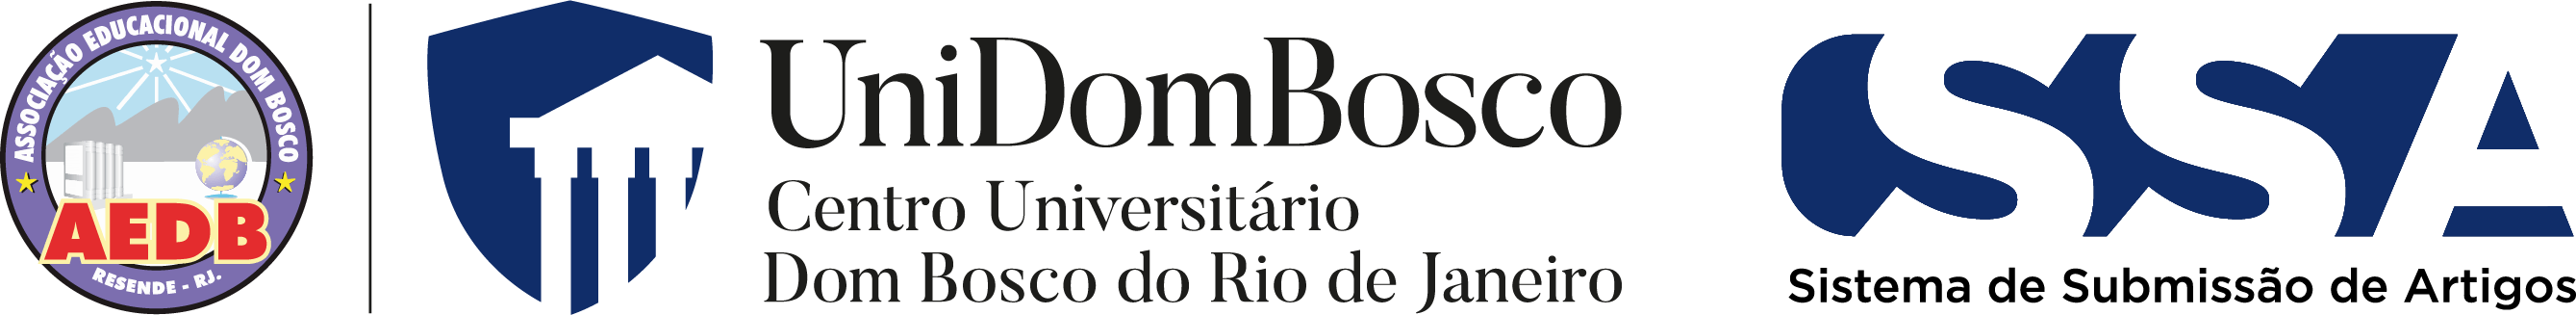 Logo UniDomBosco + SSA